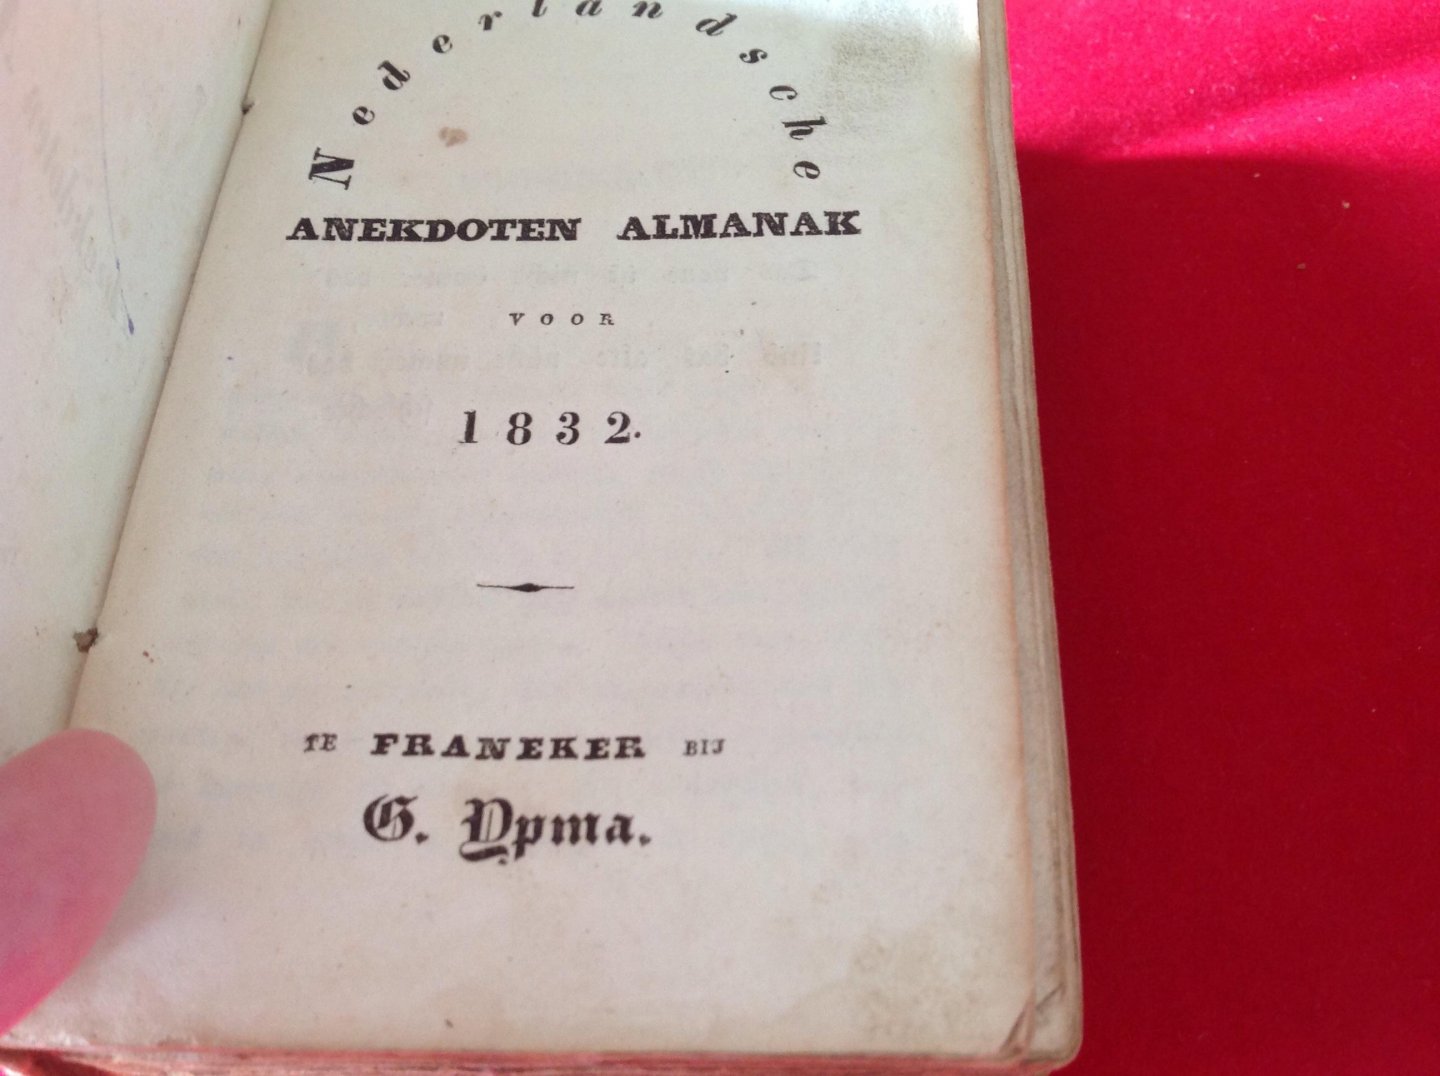  - Nederlandsche Anekdoten almanak 1832